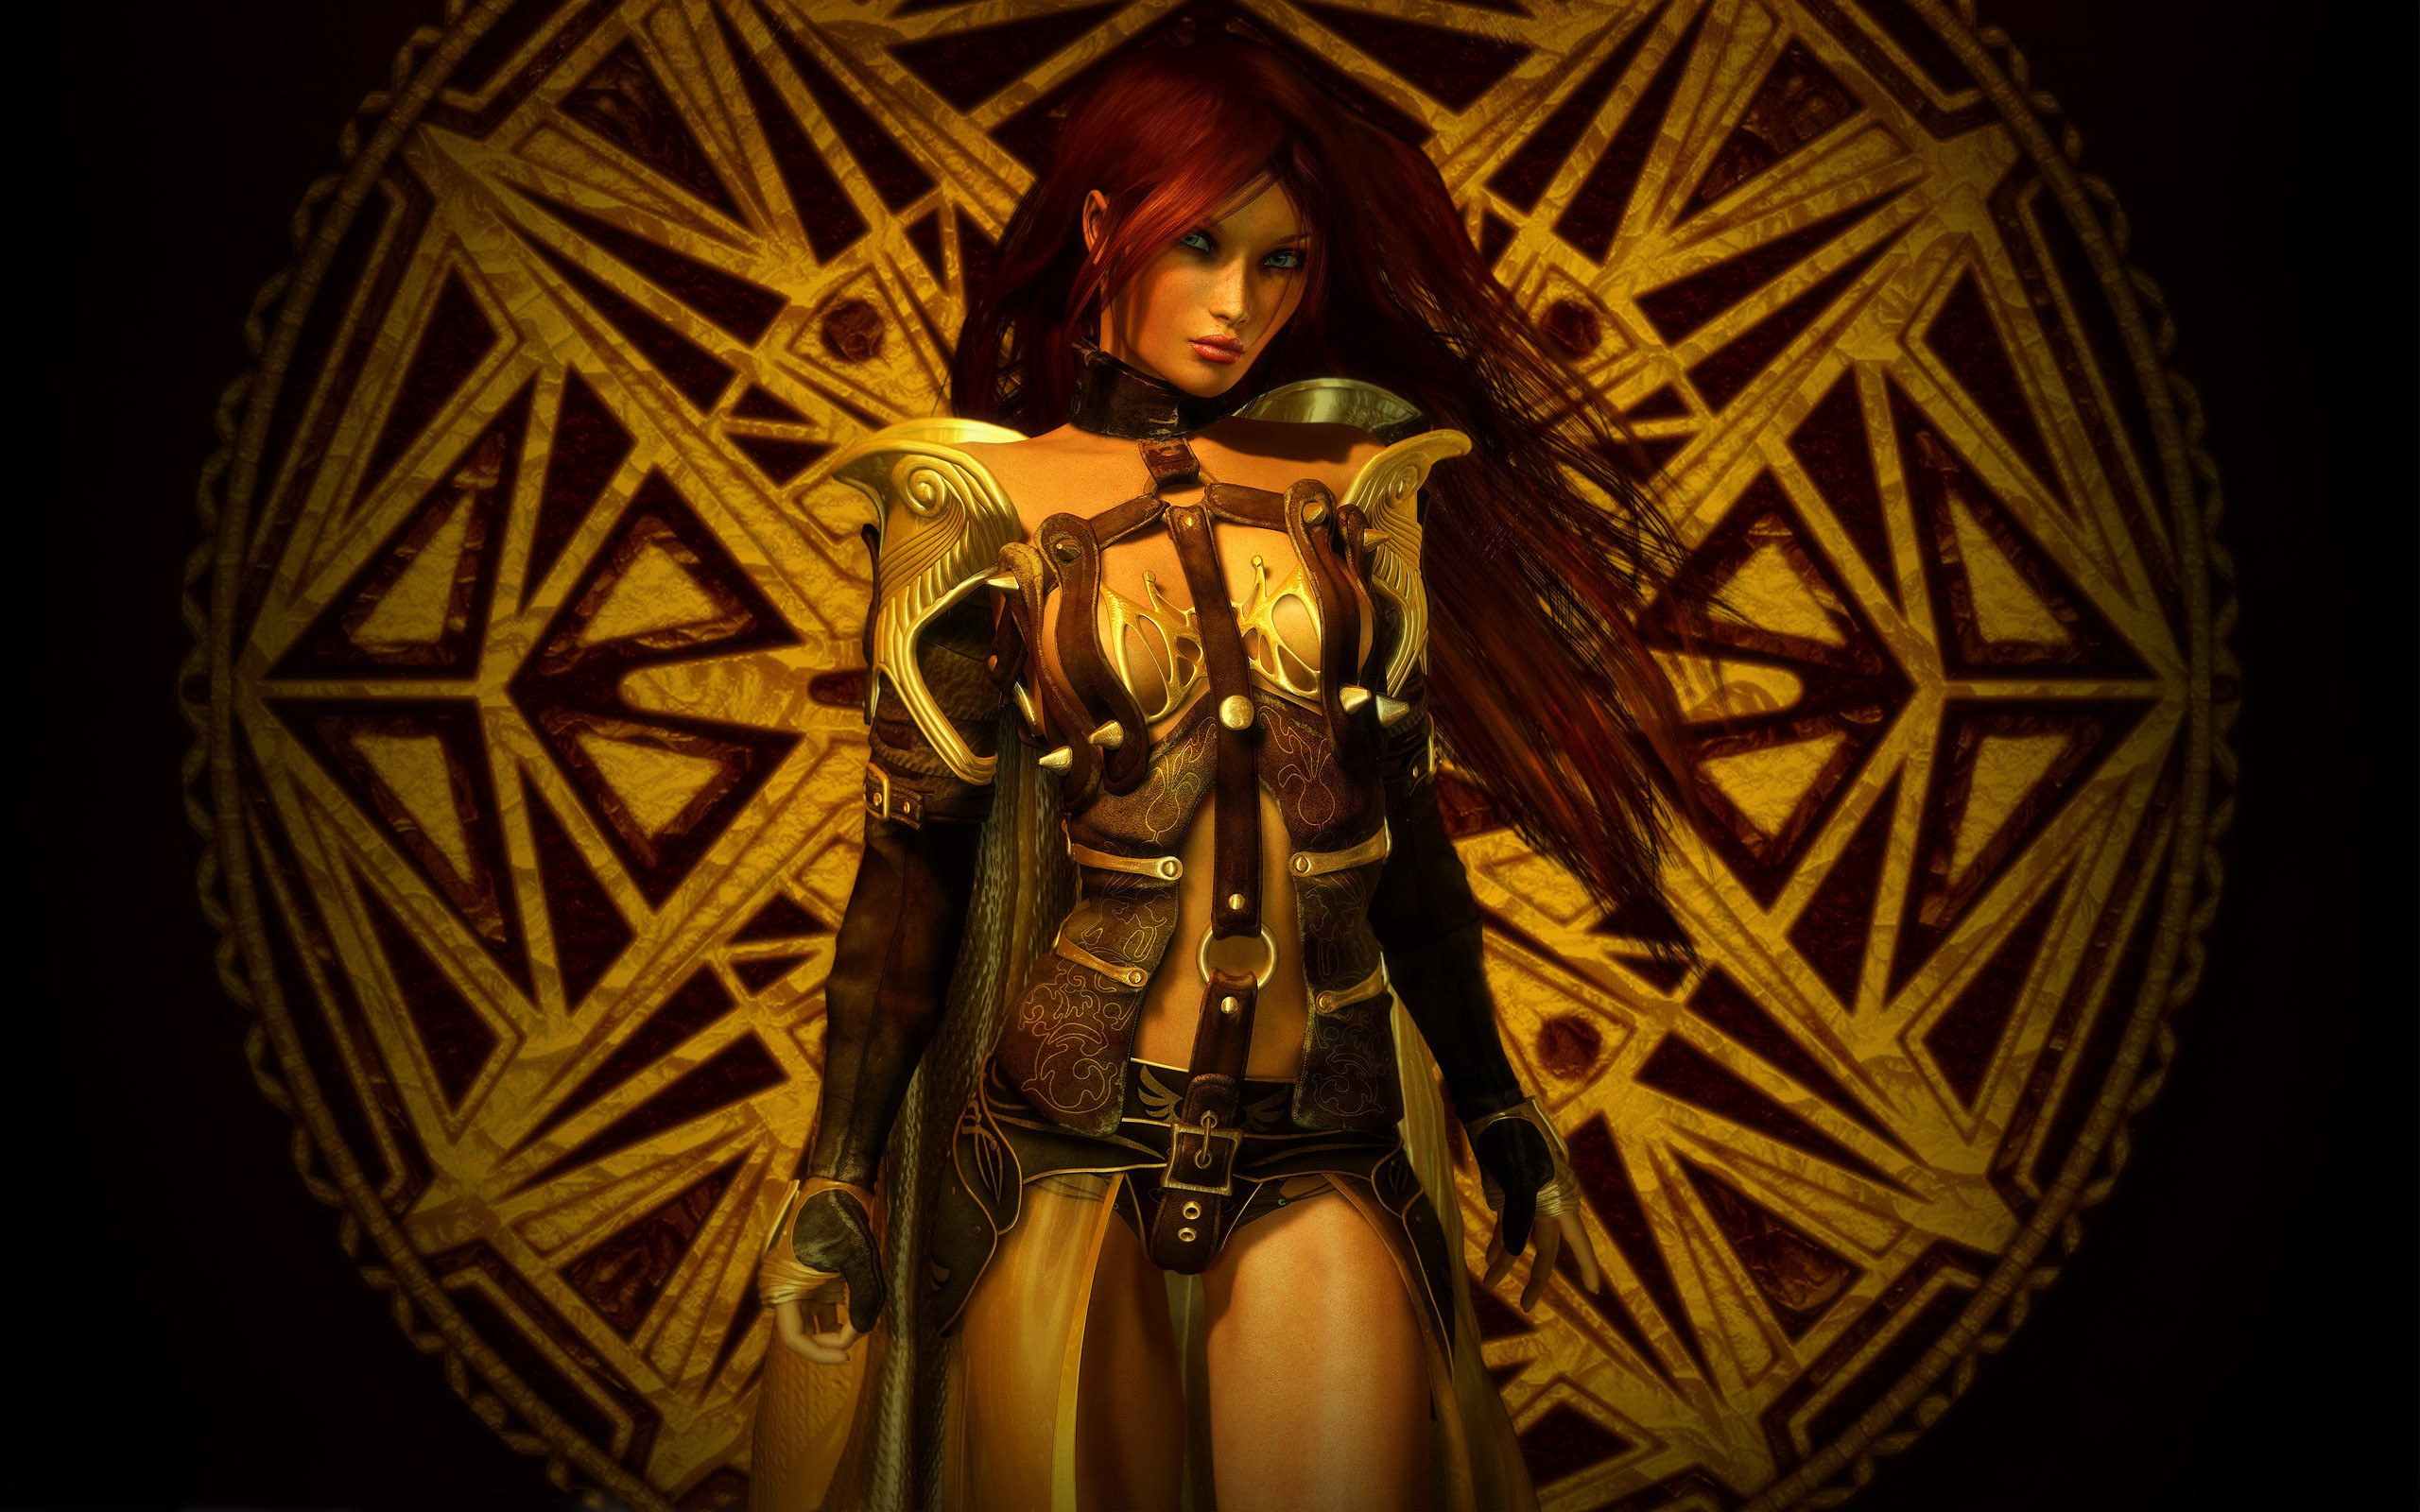 General 2560x1600 fantasy art fantasy girl redhead long hair women CGI digital art standing looking at viewer fantasy armor